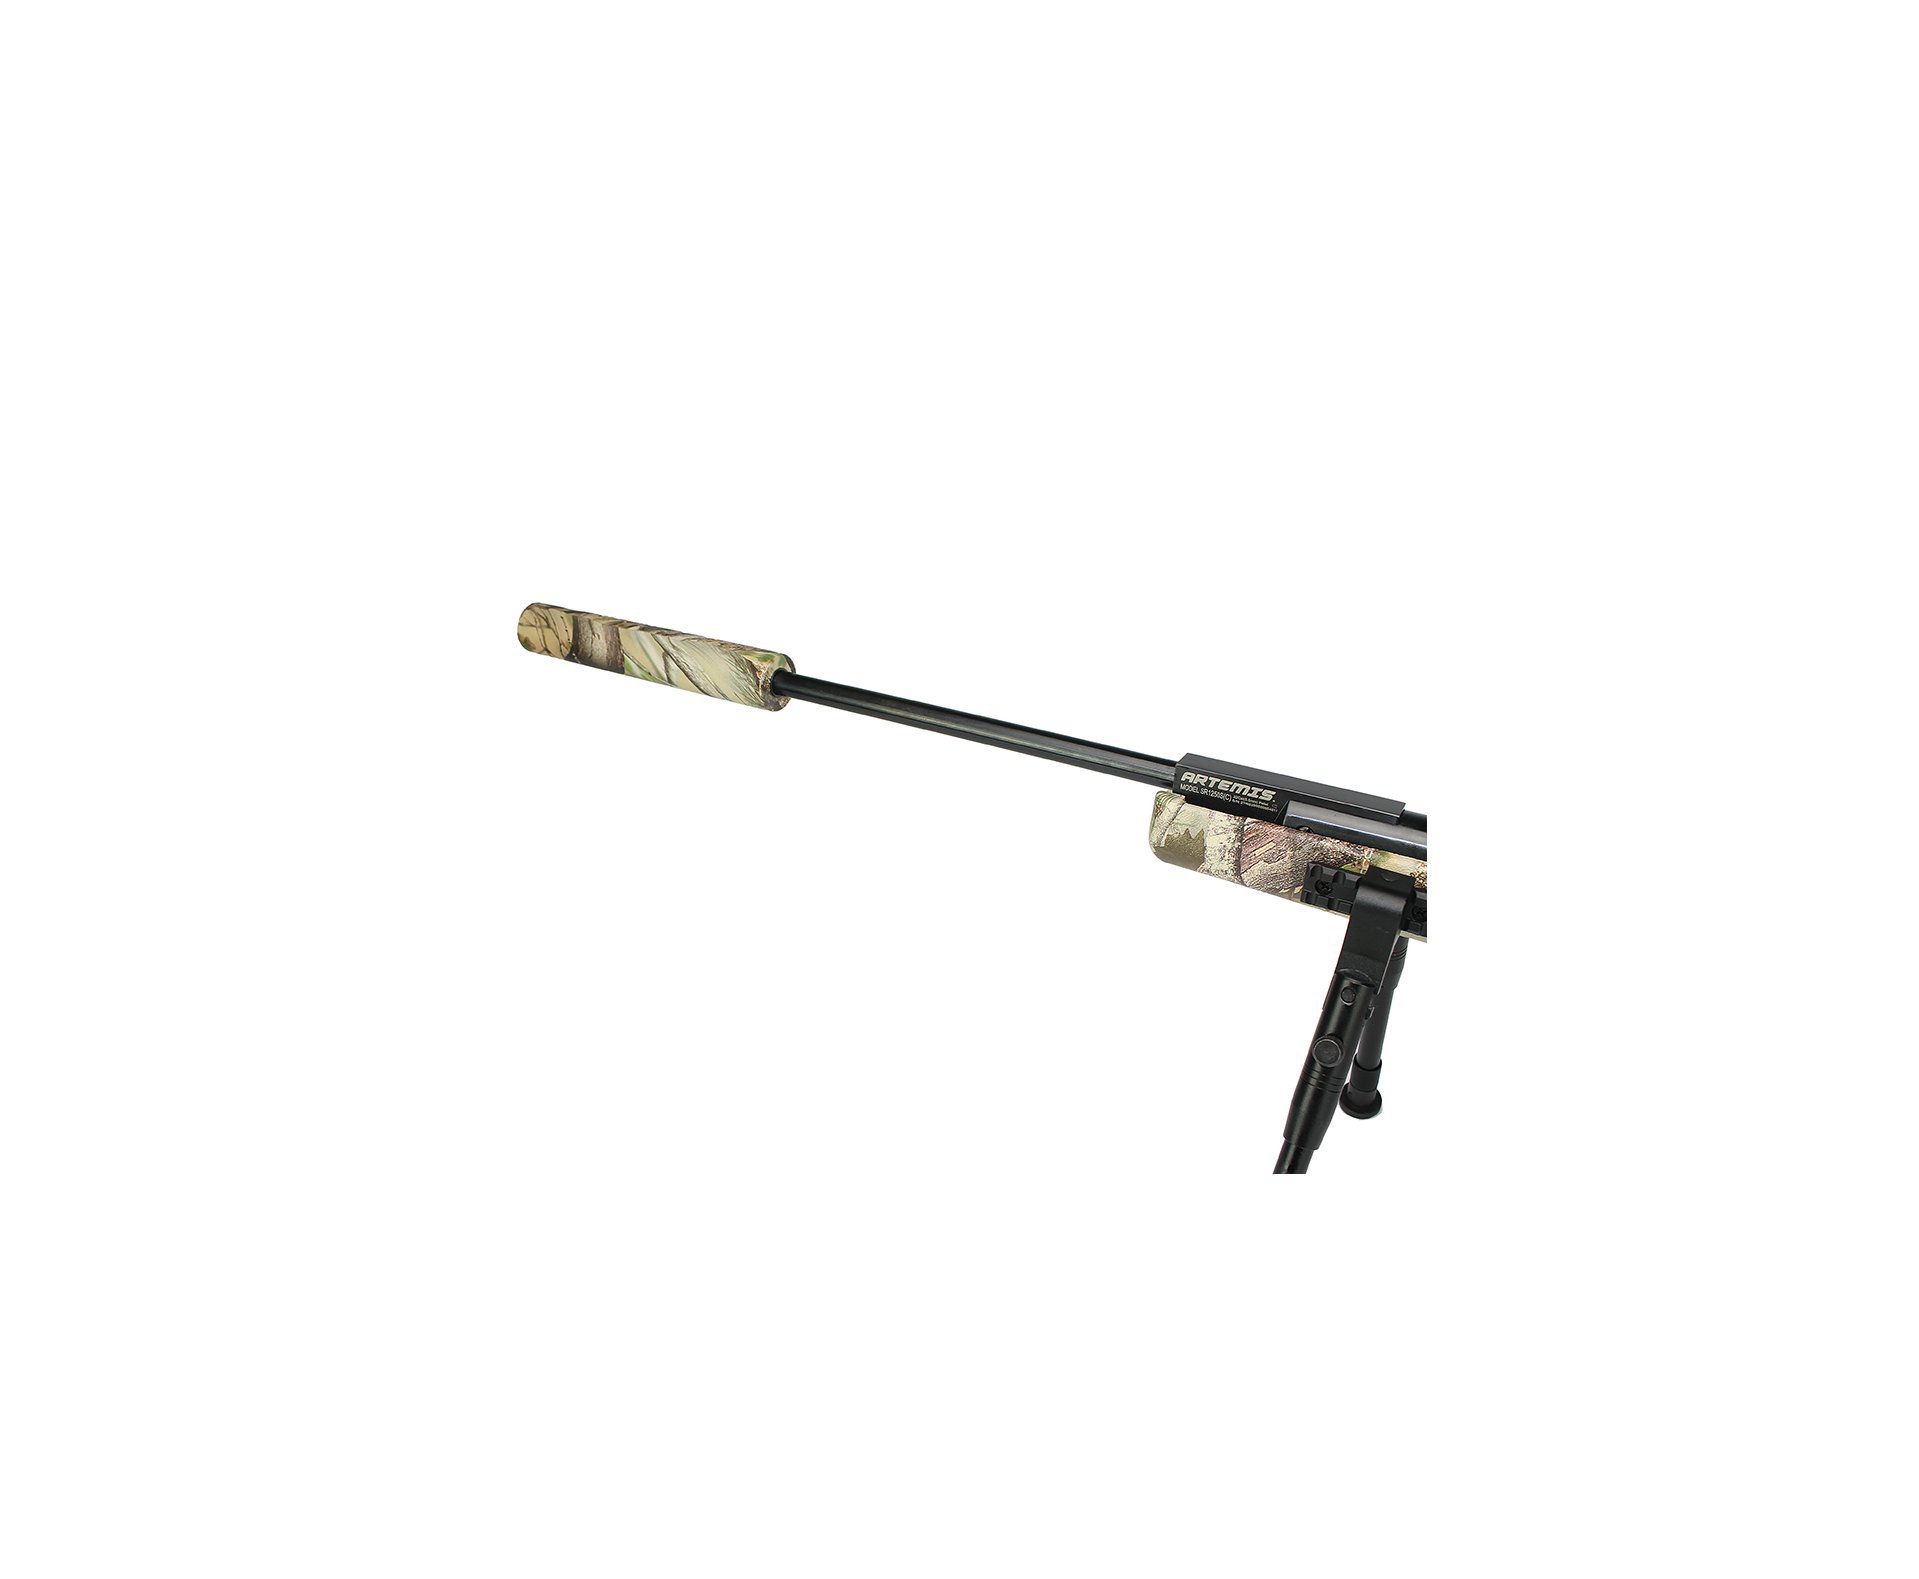 Carabina De Pressão Artemis Gp 1250c Sniper Gas Ram 70kg Camuflada 5.5mm